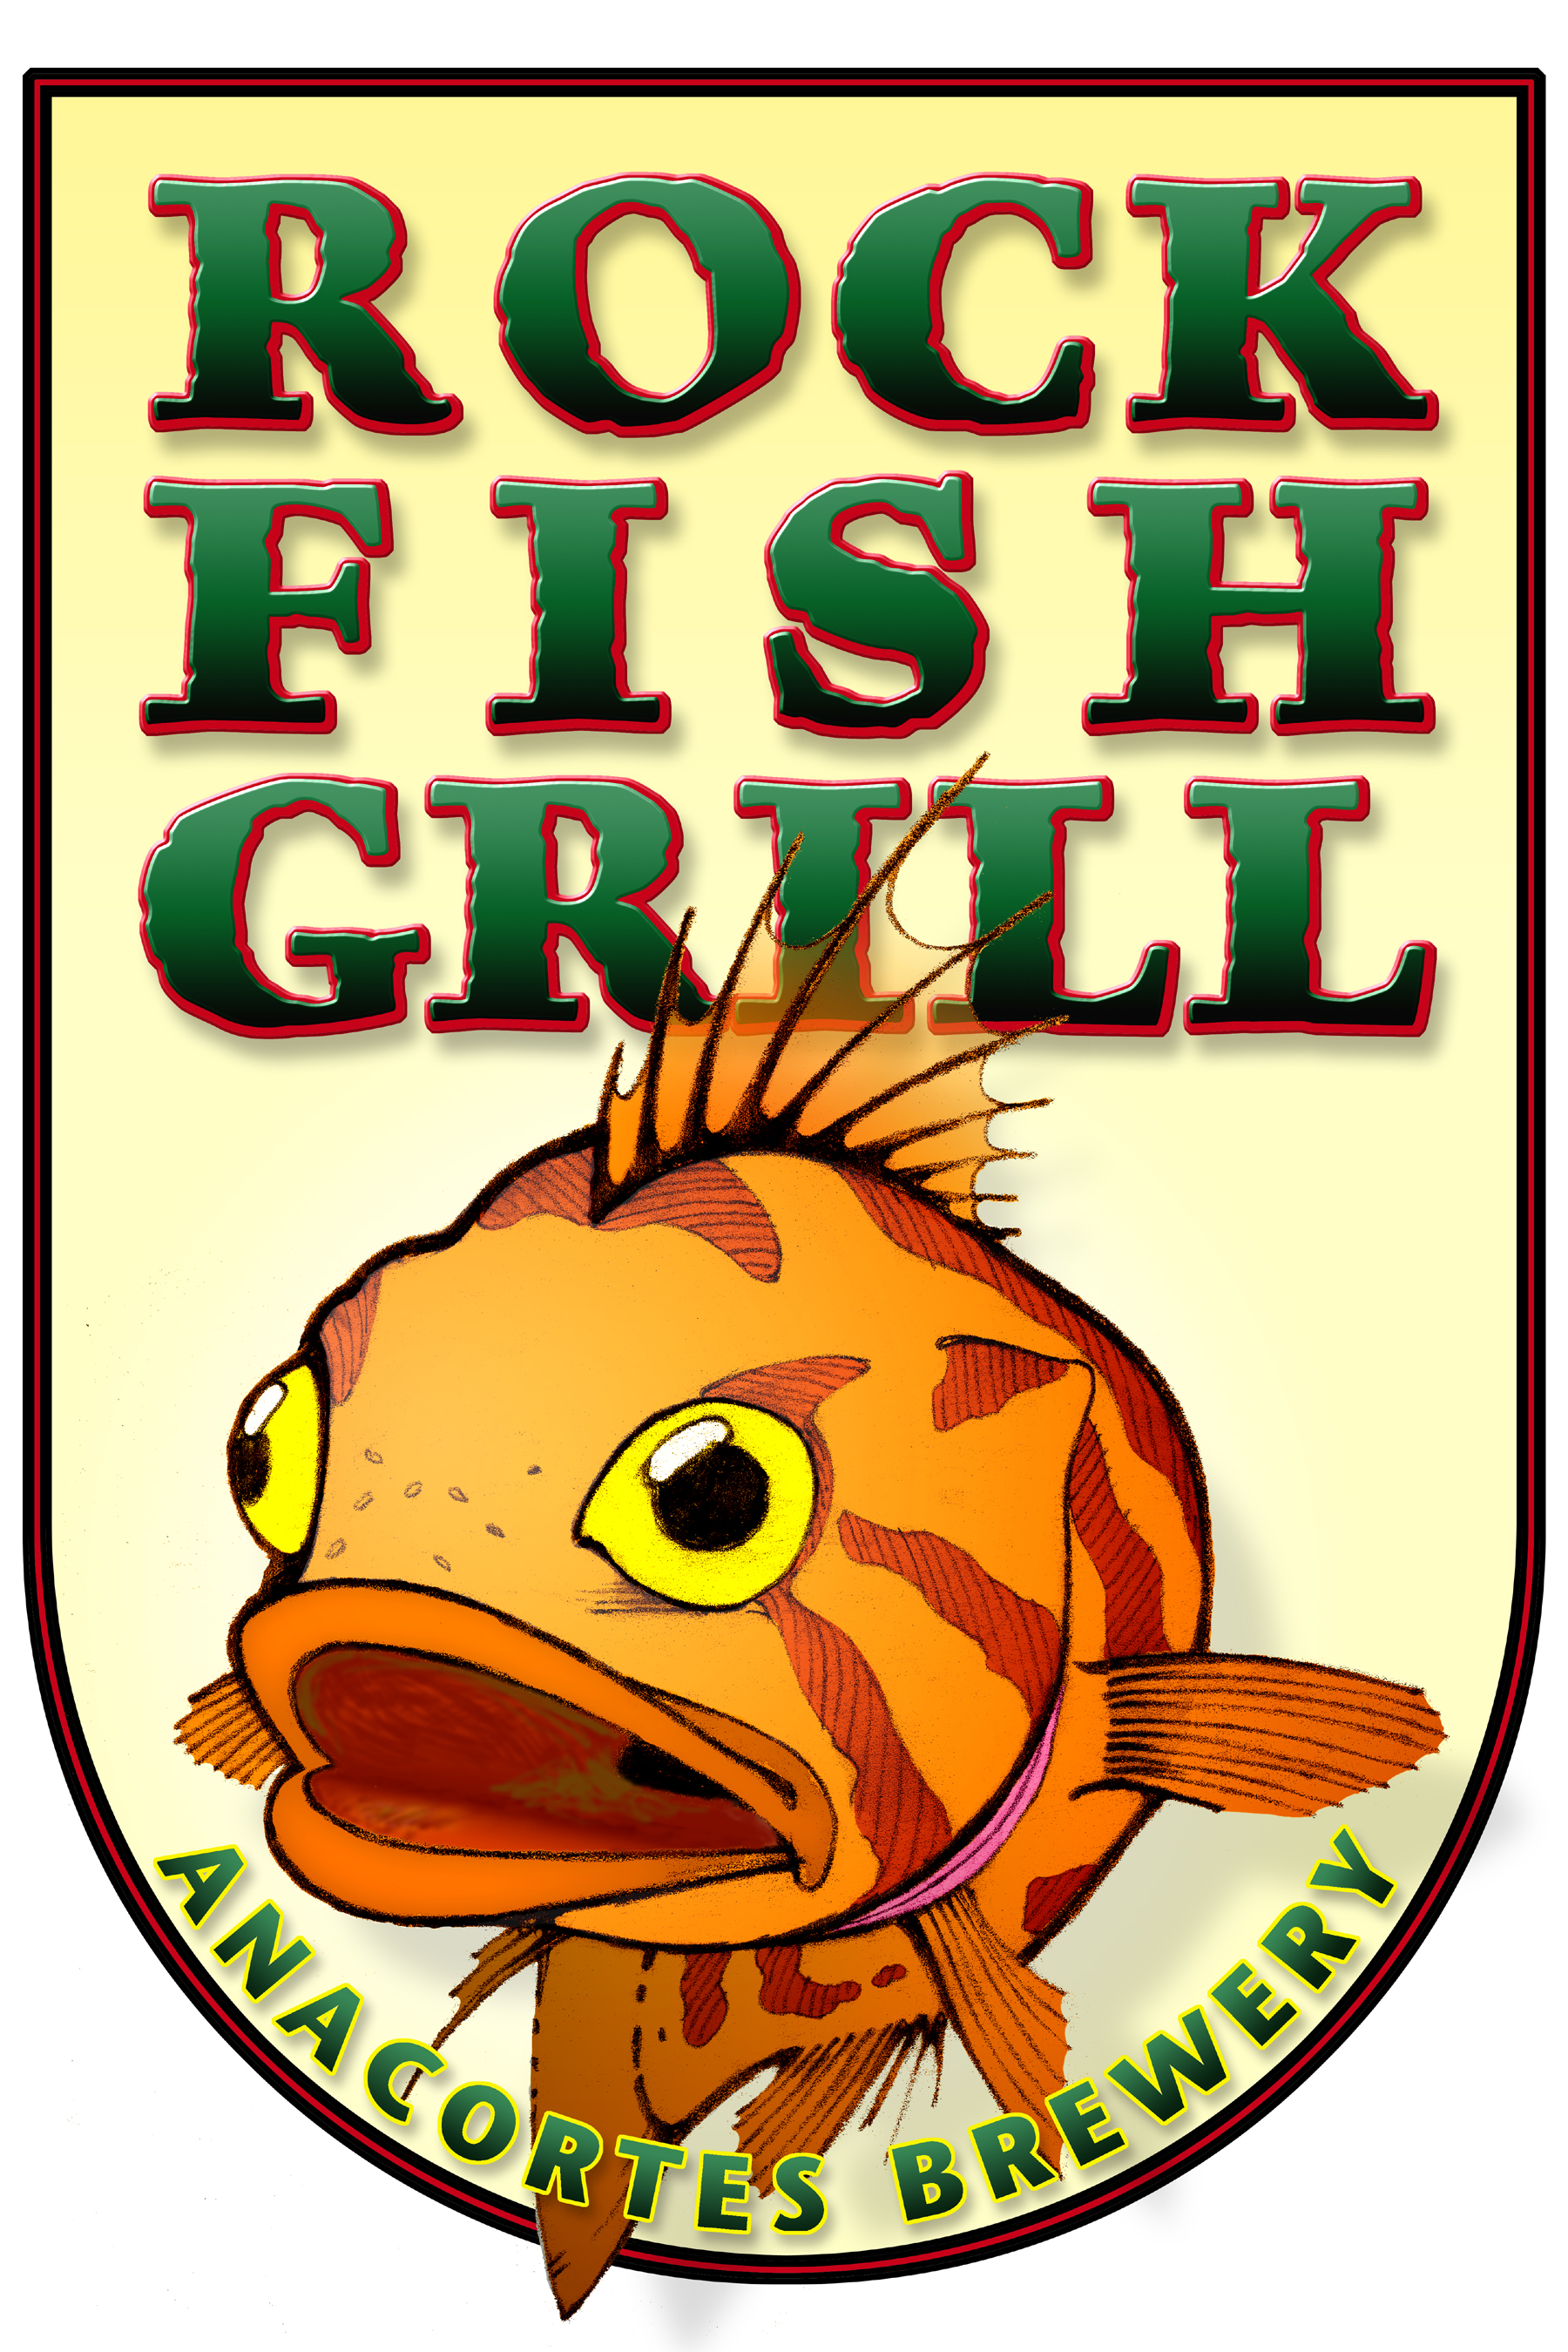 Anacortes Brewery / Rockfish Grill logo